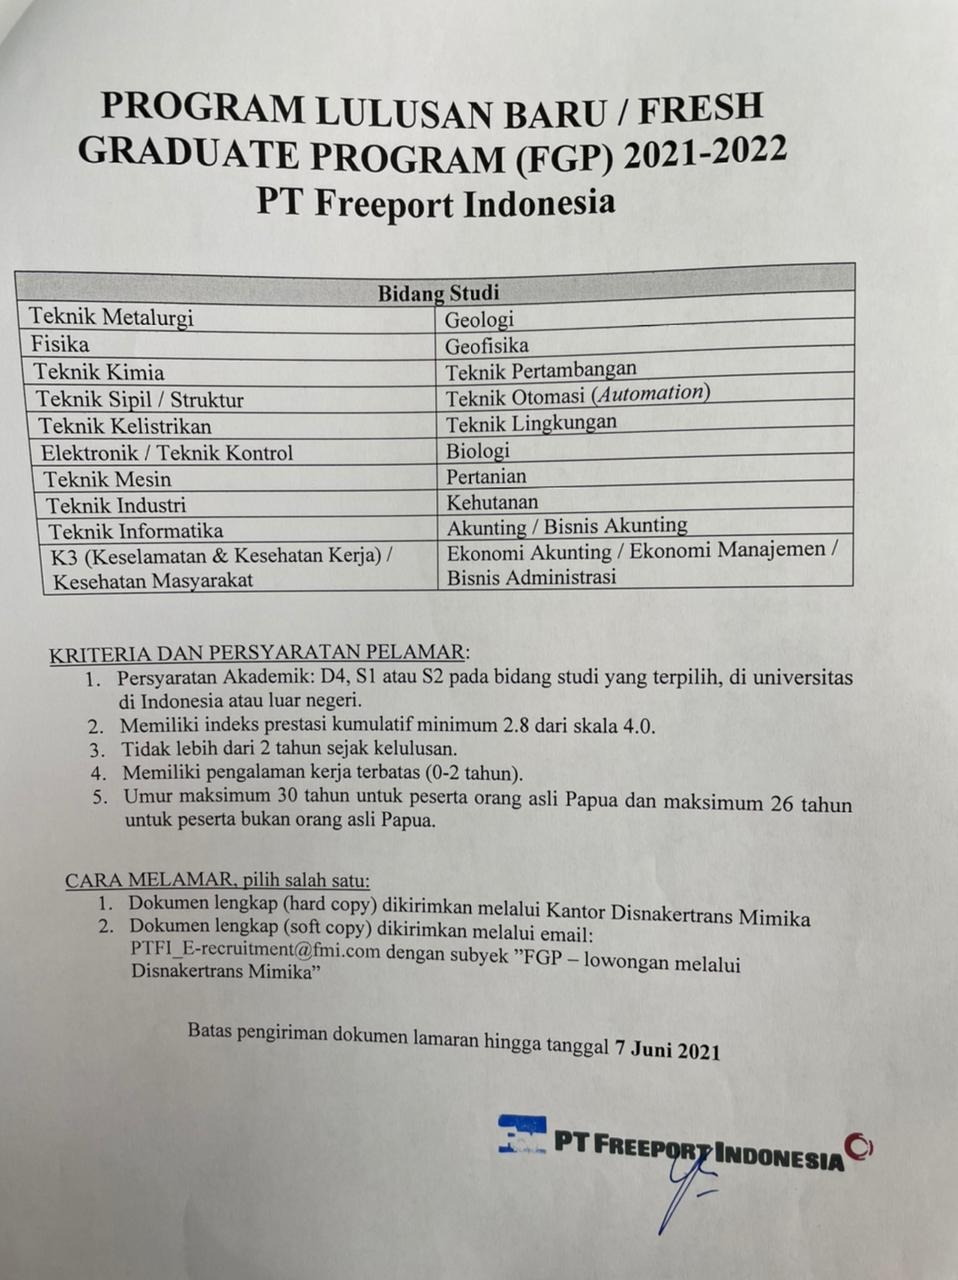 Program Lulusan Baru / Fresh Graduate Program (FGP) 2021-2022 PT. Freeport Indonesia